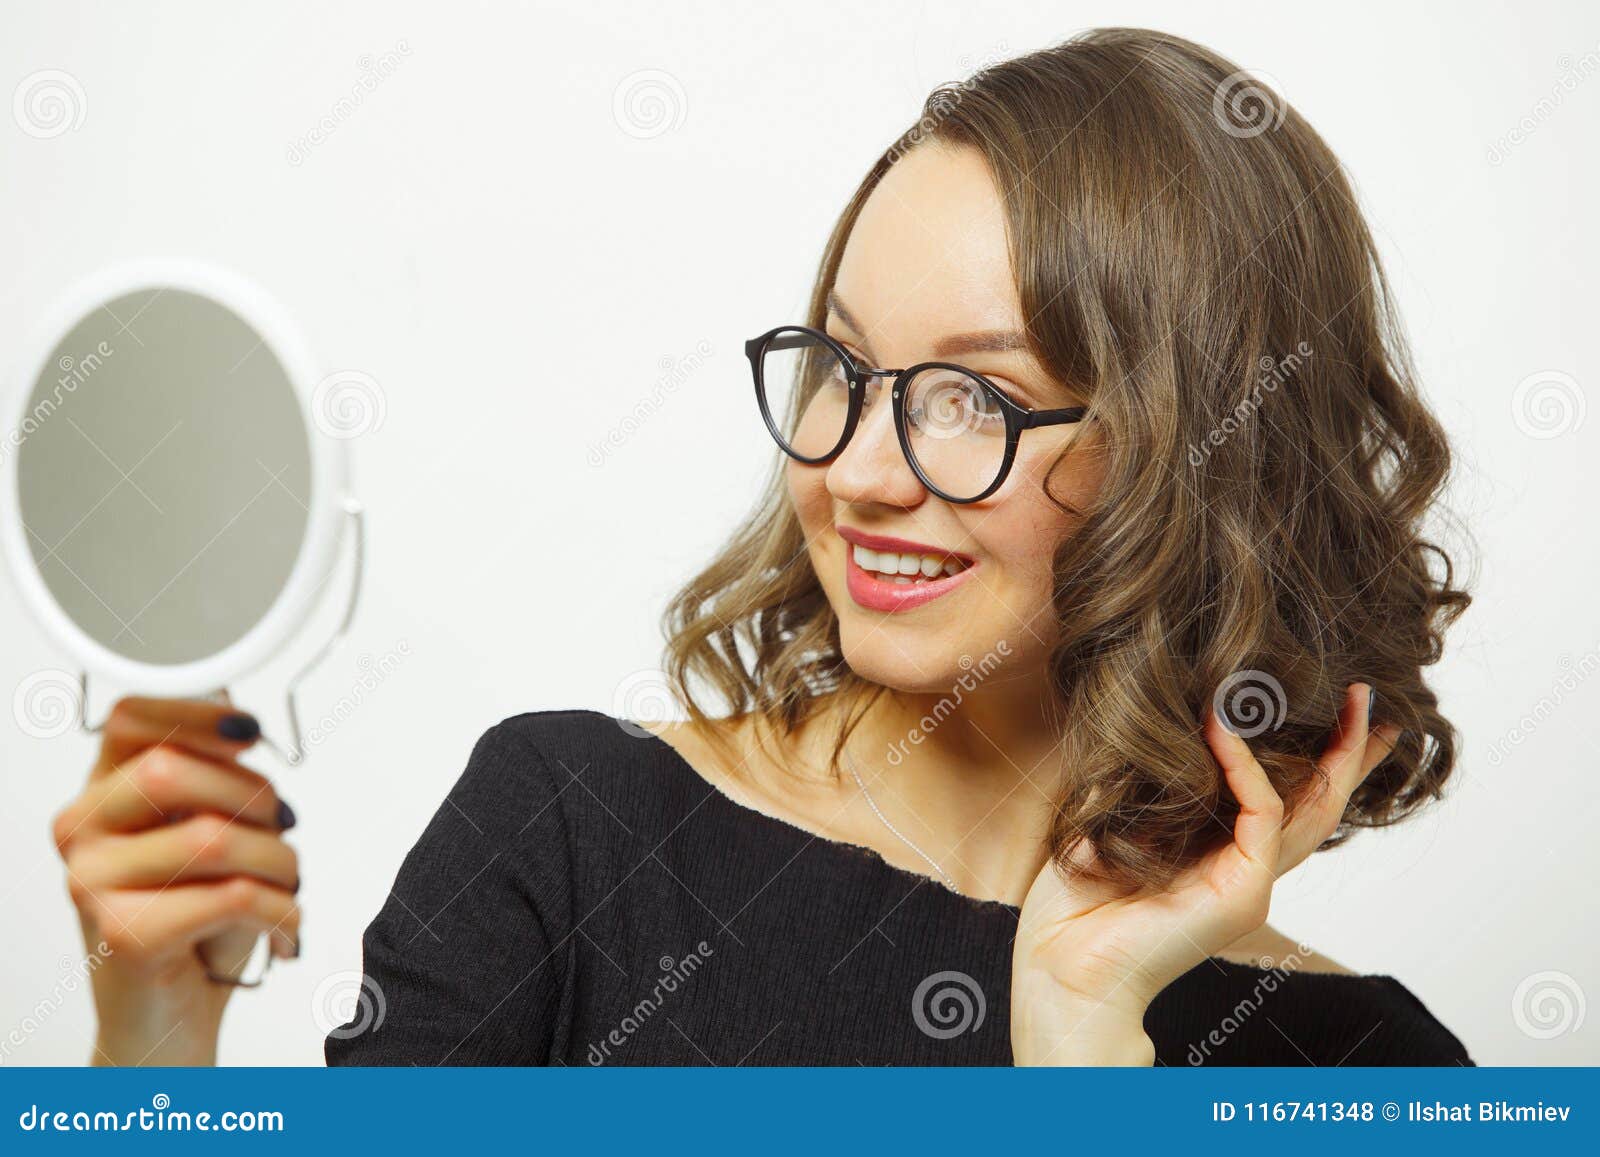 mirror selfie poses  hide face mirror selfie poses idea for girls   short posesidea  YouTube